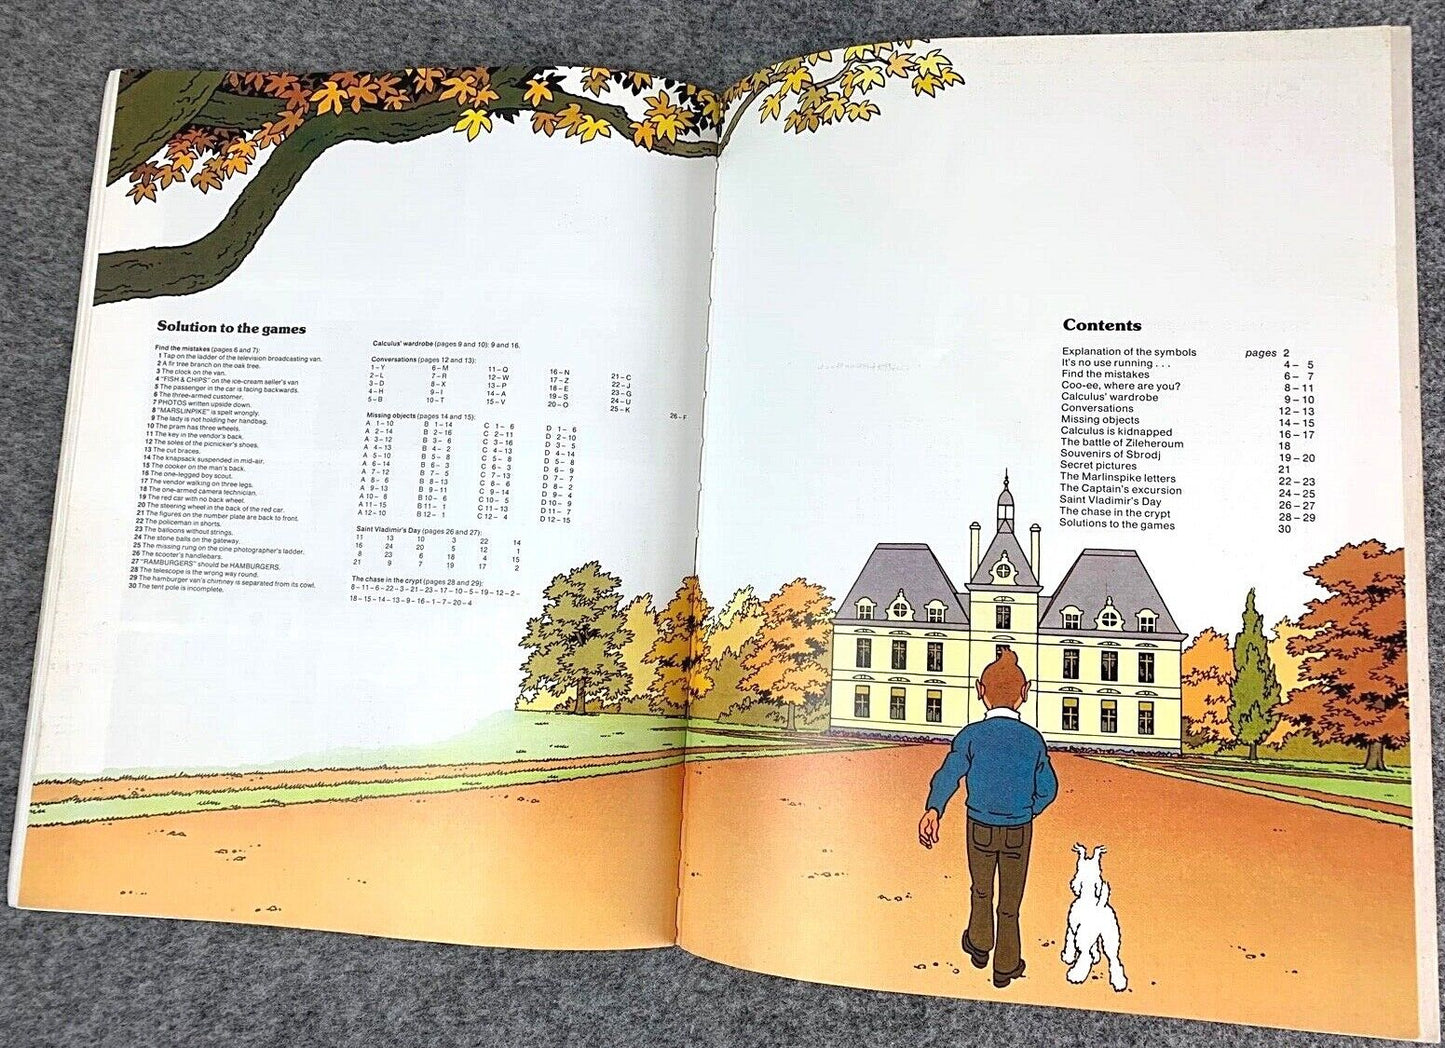 The Tintin Games Book - Vintage Tintin Mammoth UK Paperback Edition Book 1990